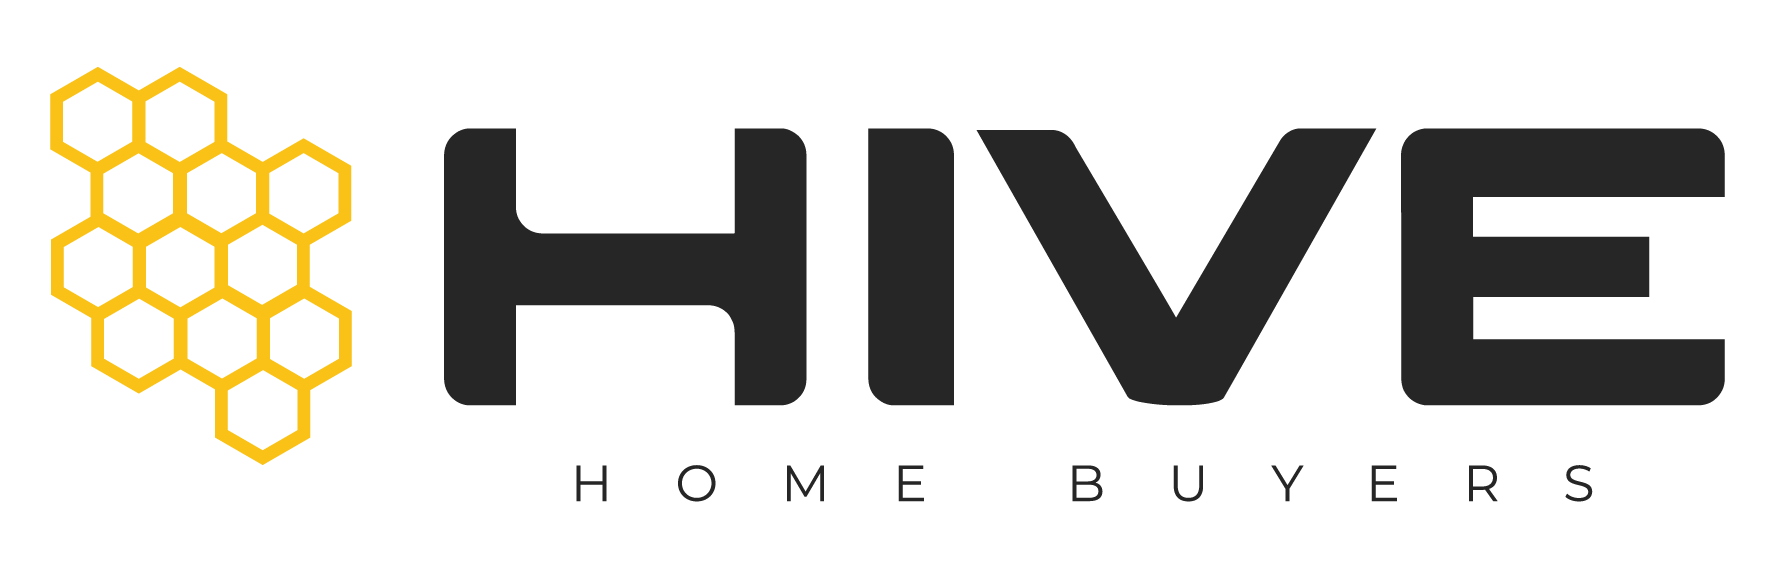 Hive Home Buyers logo